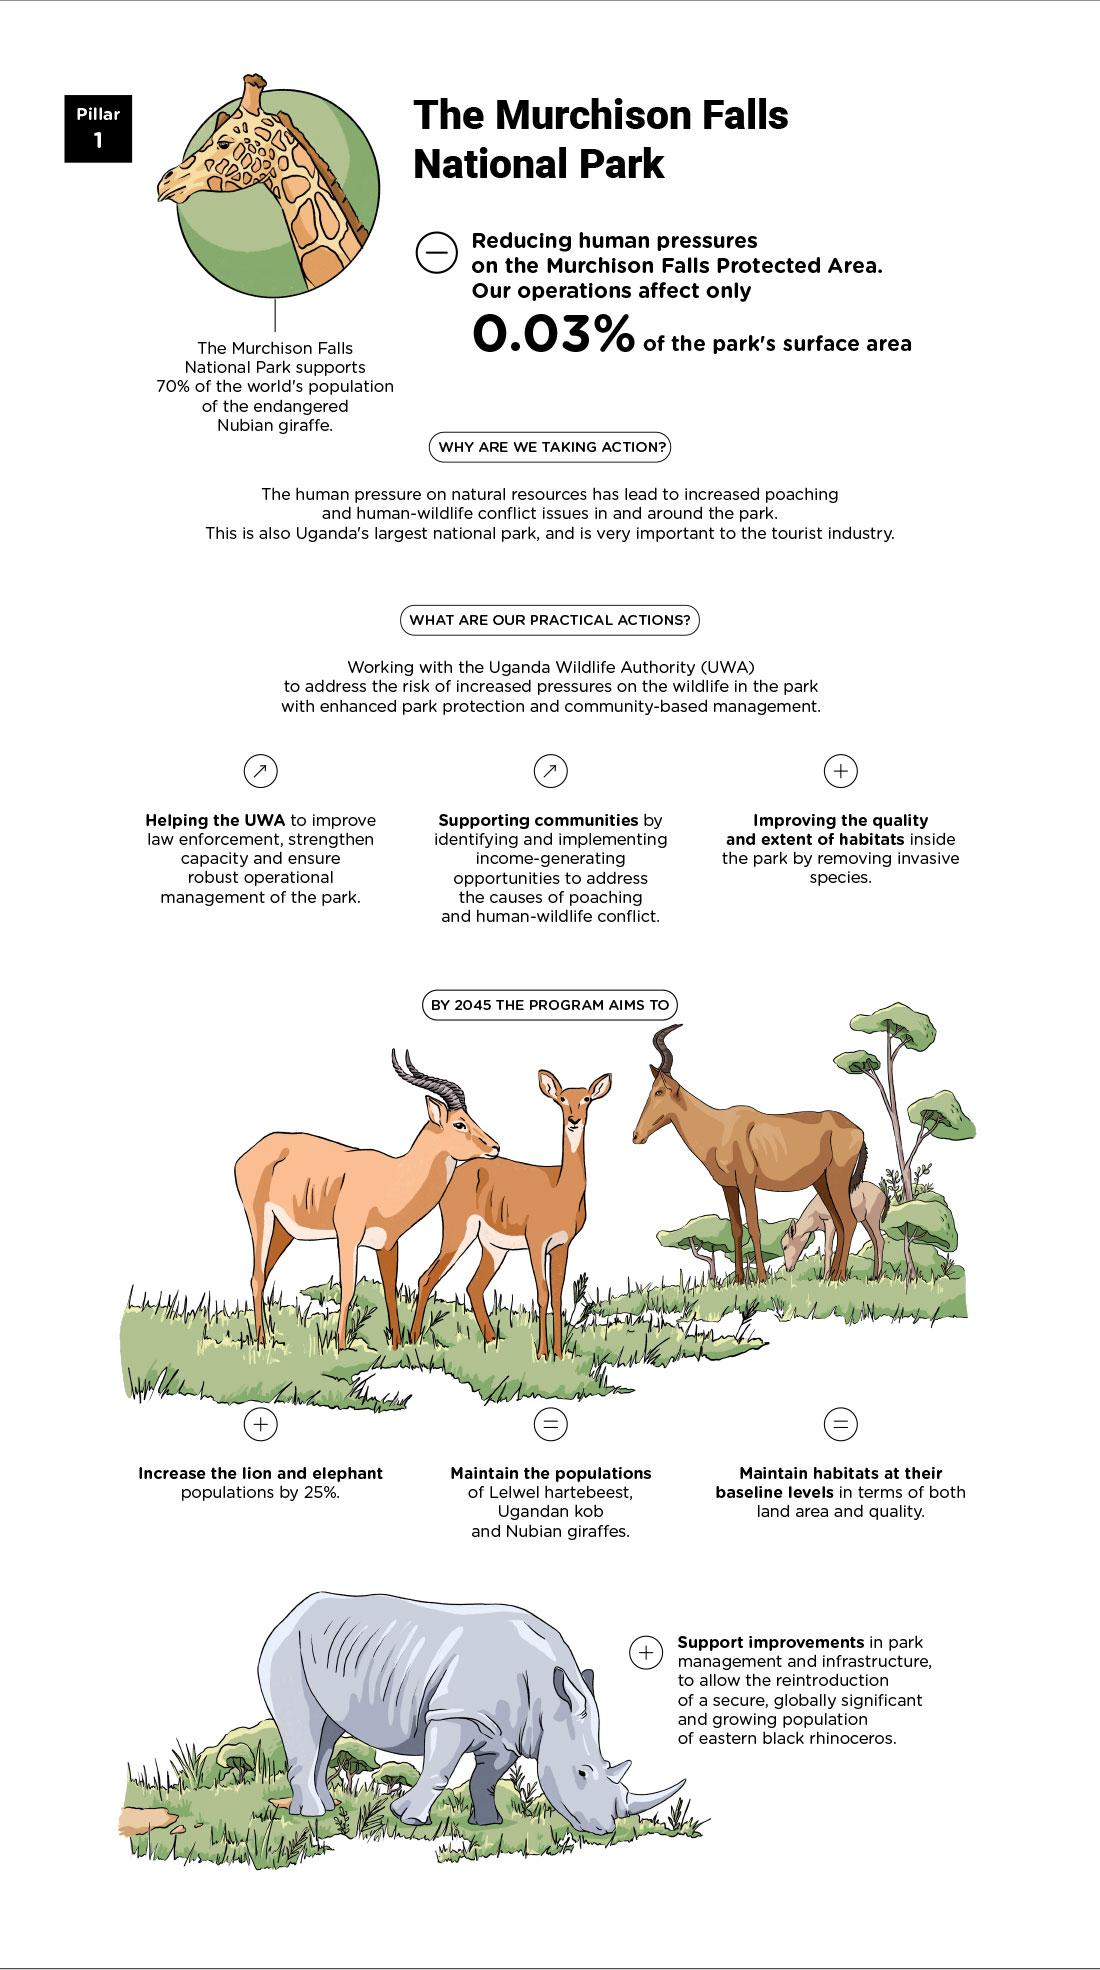 Infographics "Pillar 1: The Murchison Falls National Park" - see detailed description hereafter